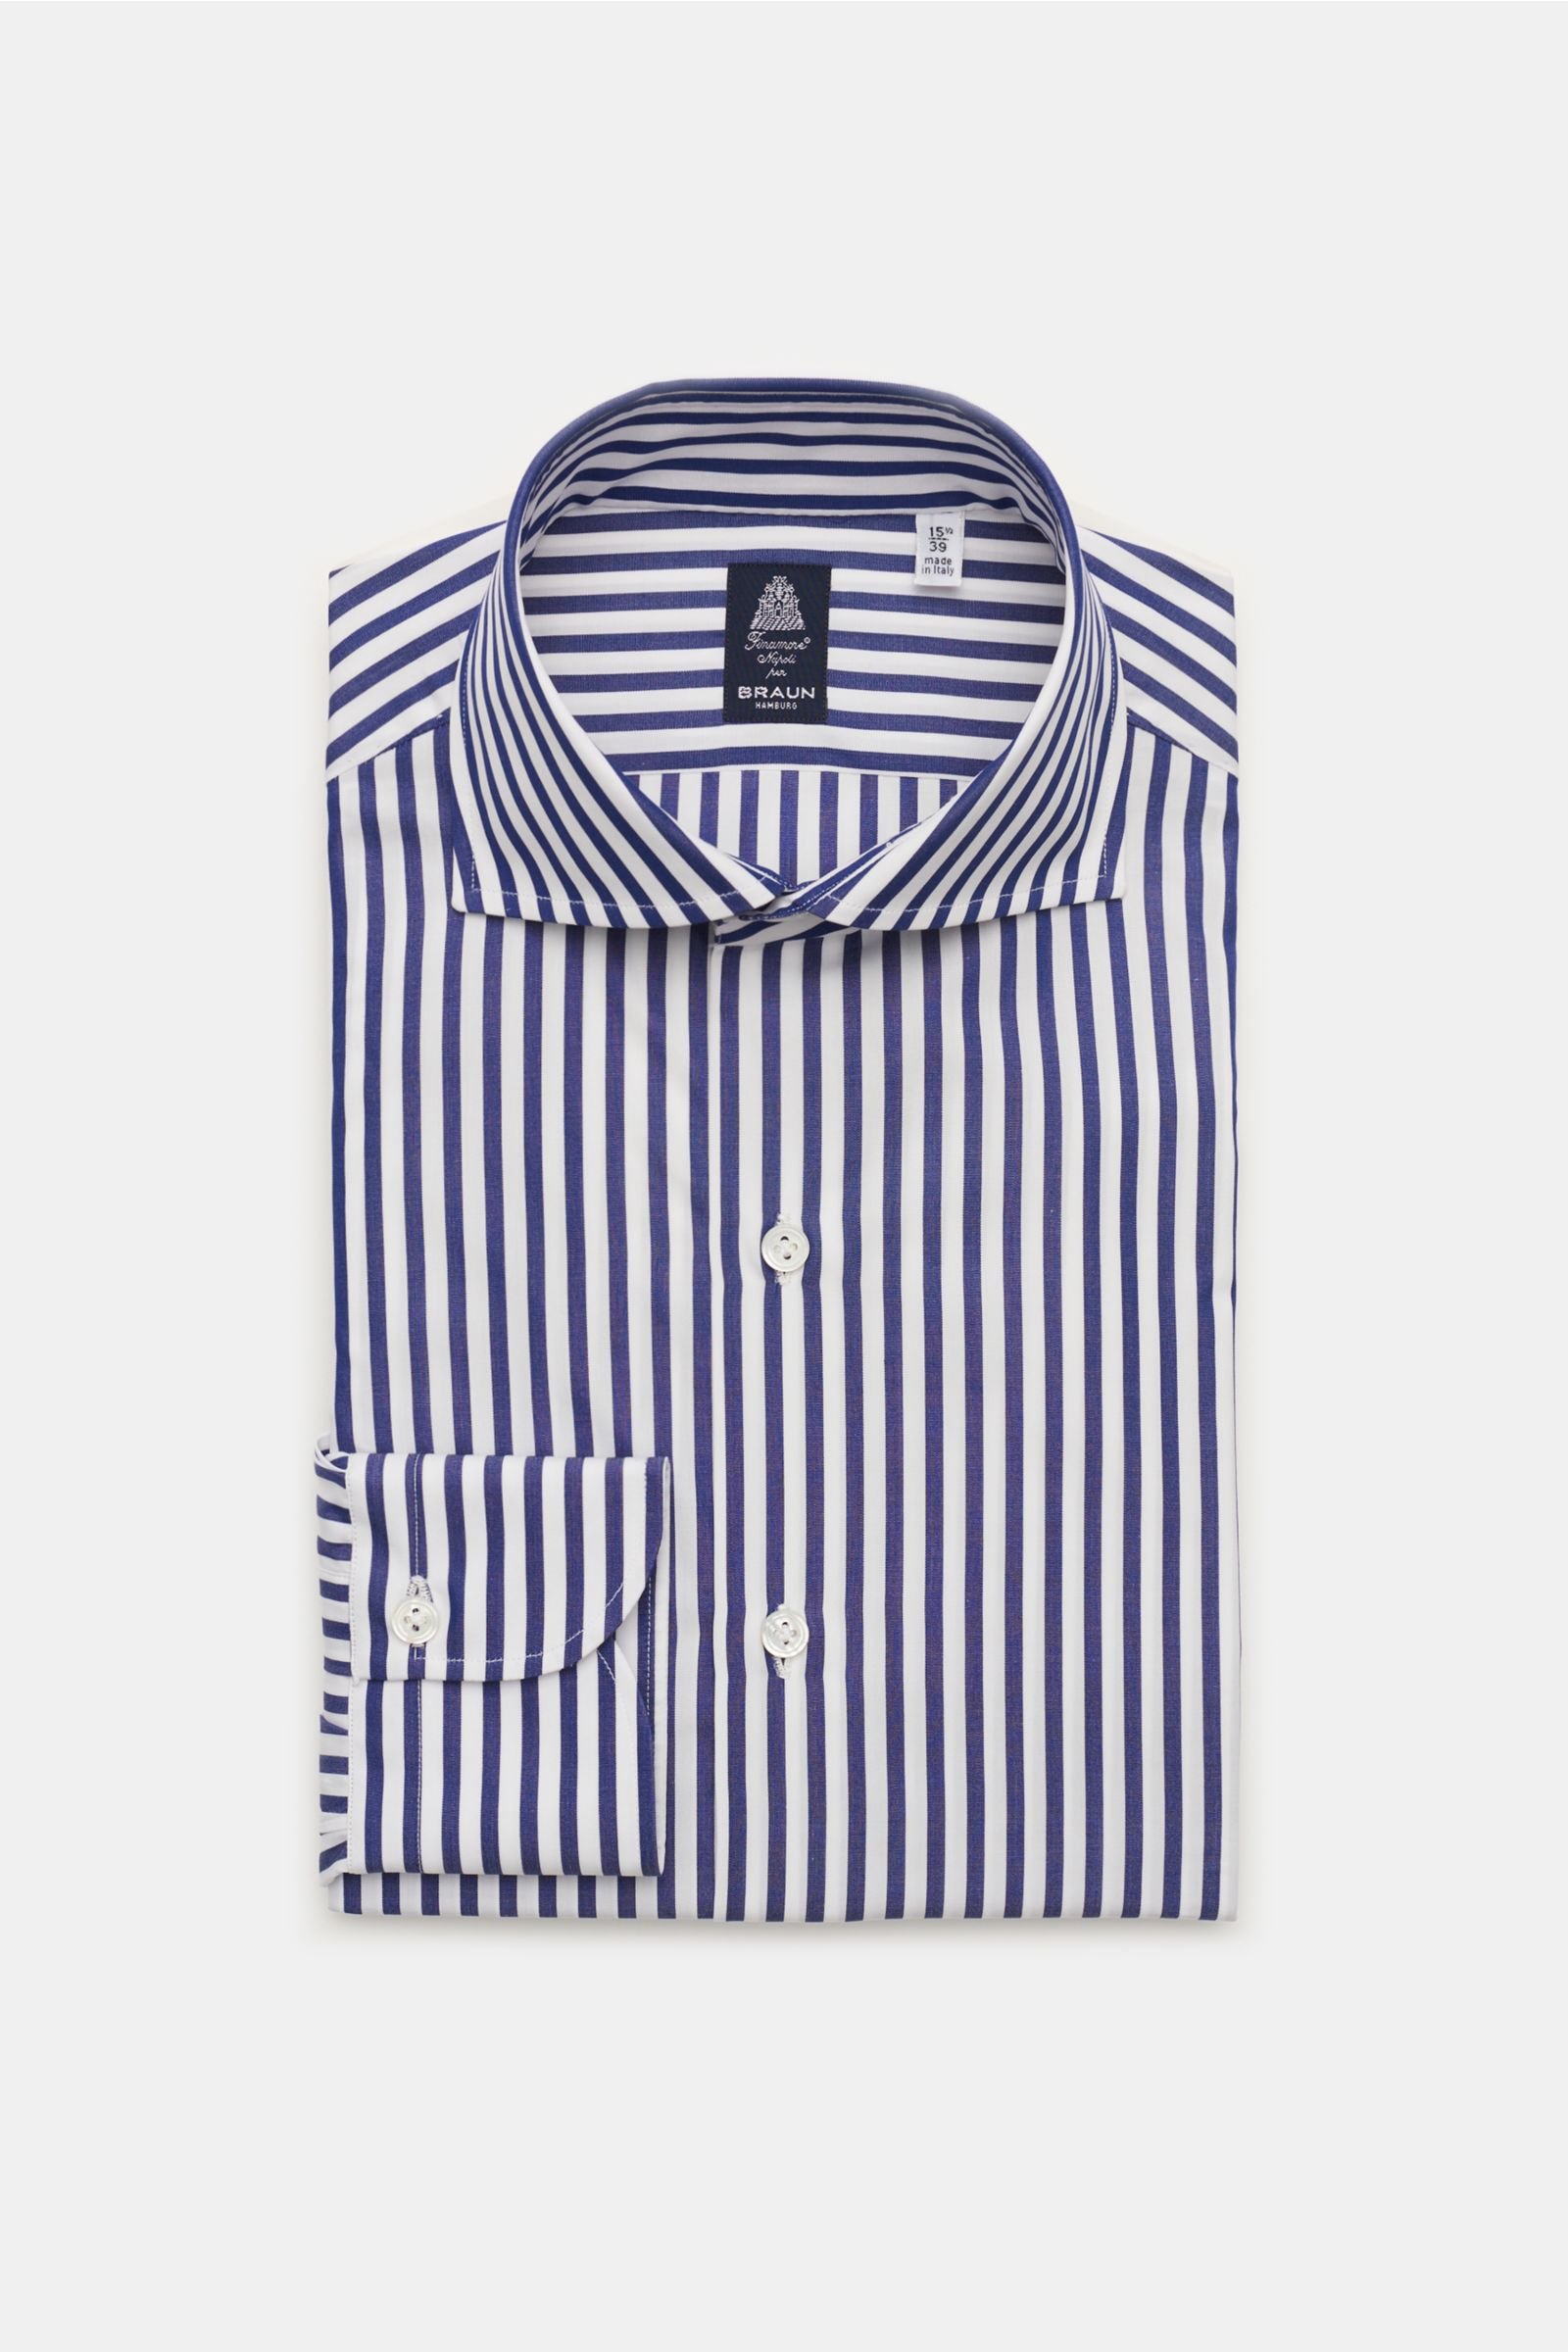 Business shirt 'Eduardo Napoli' shark collar navy/white striped